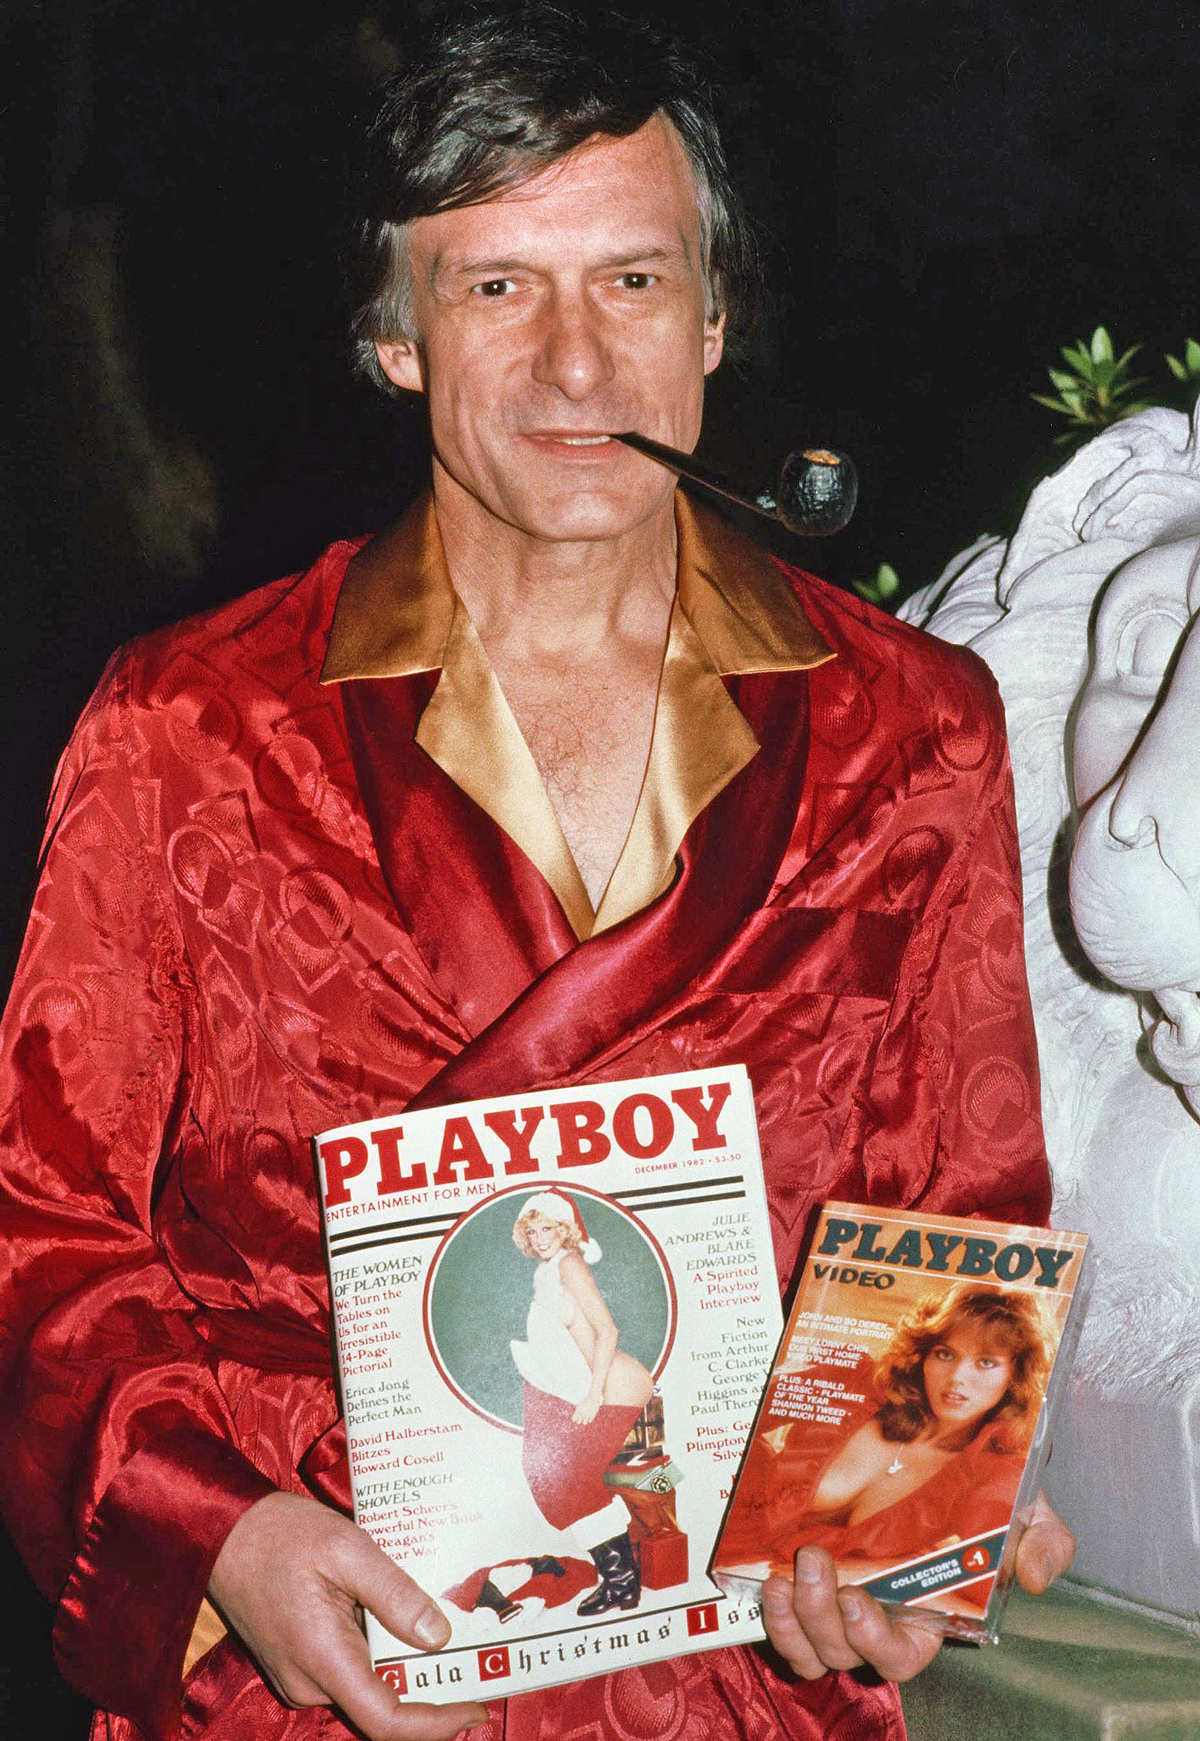 La primera revista Playboy salió a la venta en 1953. Mandatory Credit: Photo by Nick Ut/AP/REX/Shutterstock (6555506a)
Playboy founder Hugh Hefner shown with a Playboy Magazine and Playboy video
Hugh Hefner, USA